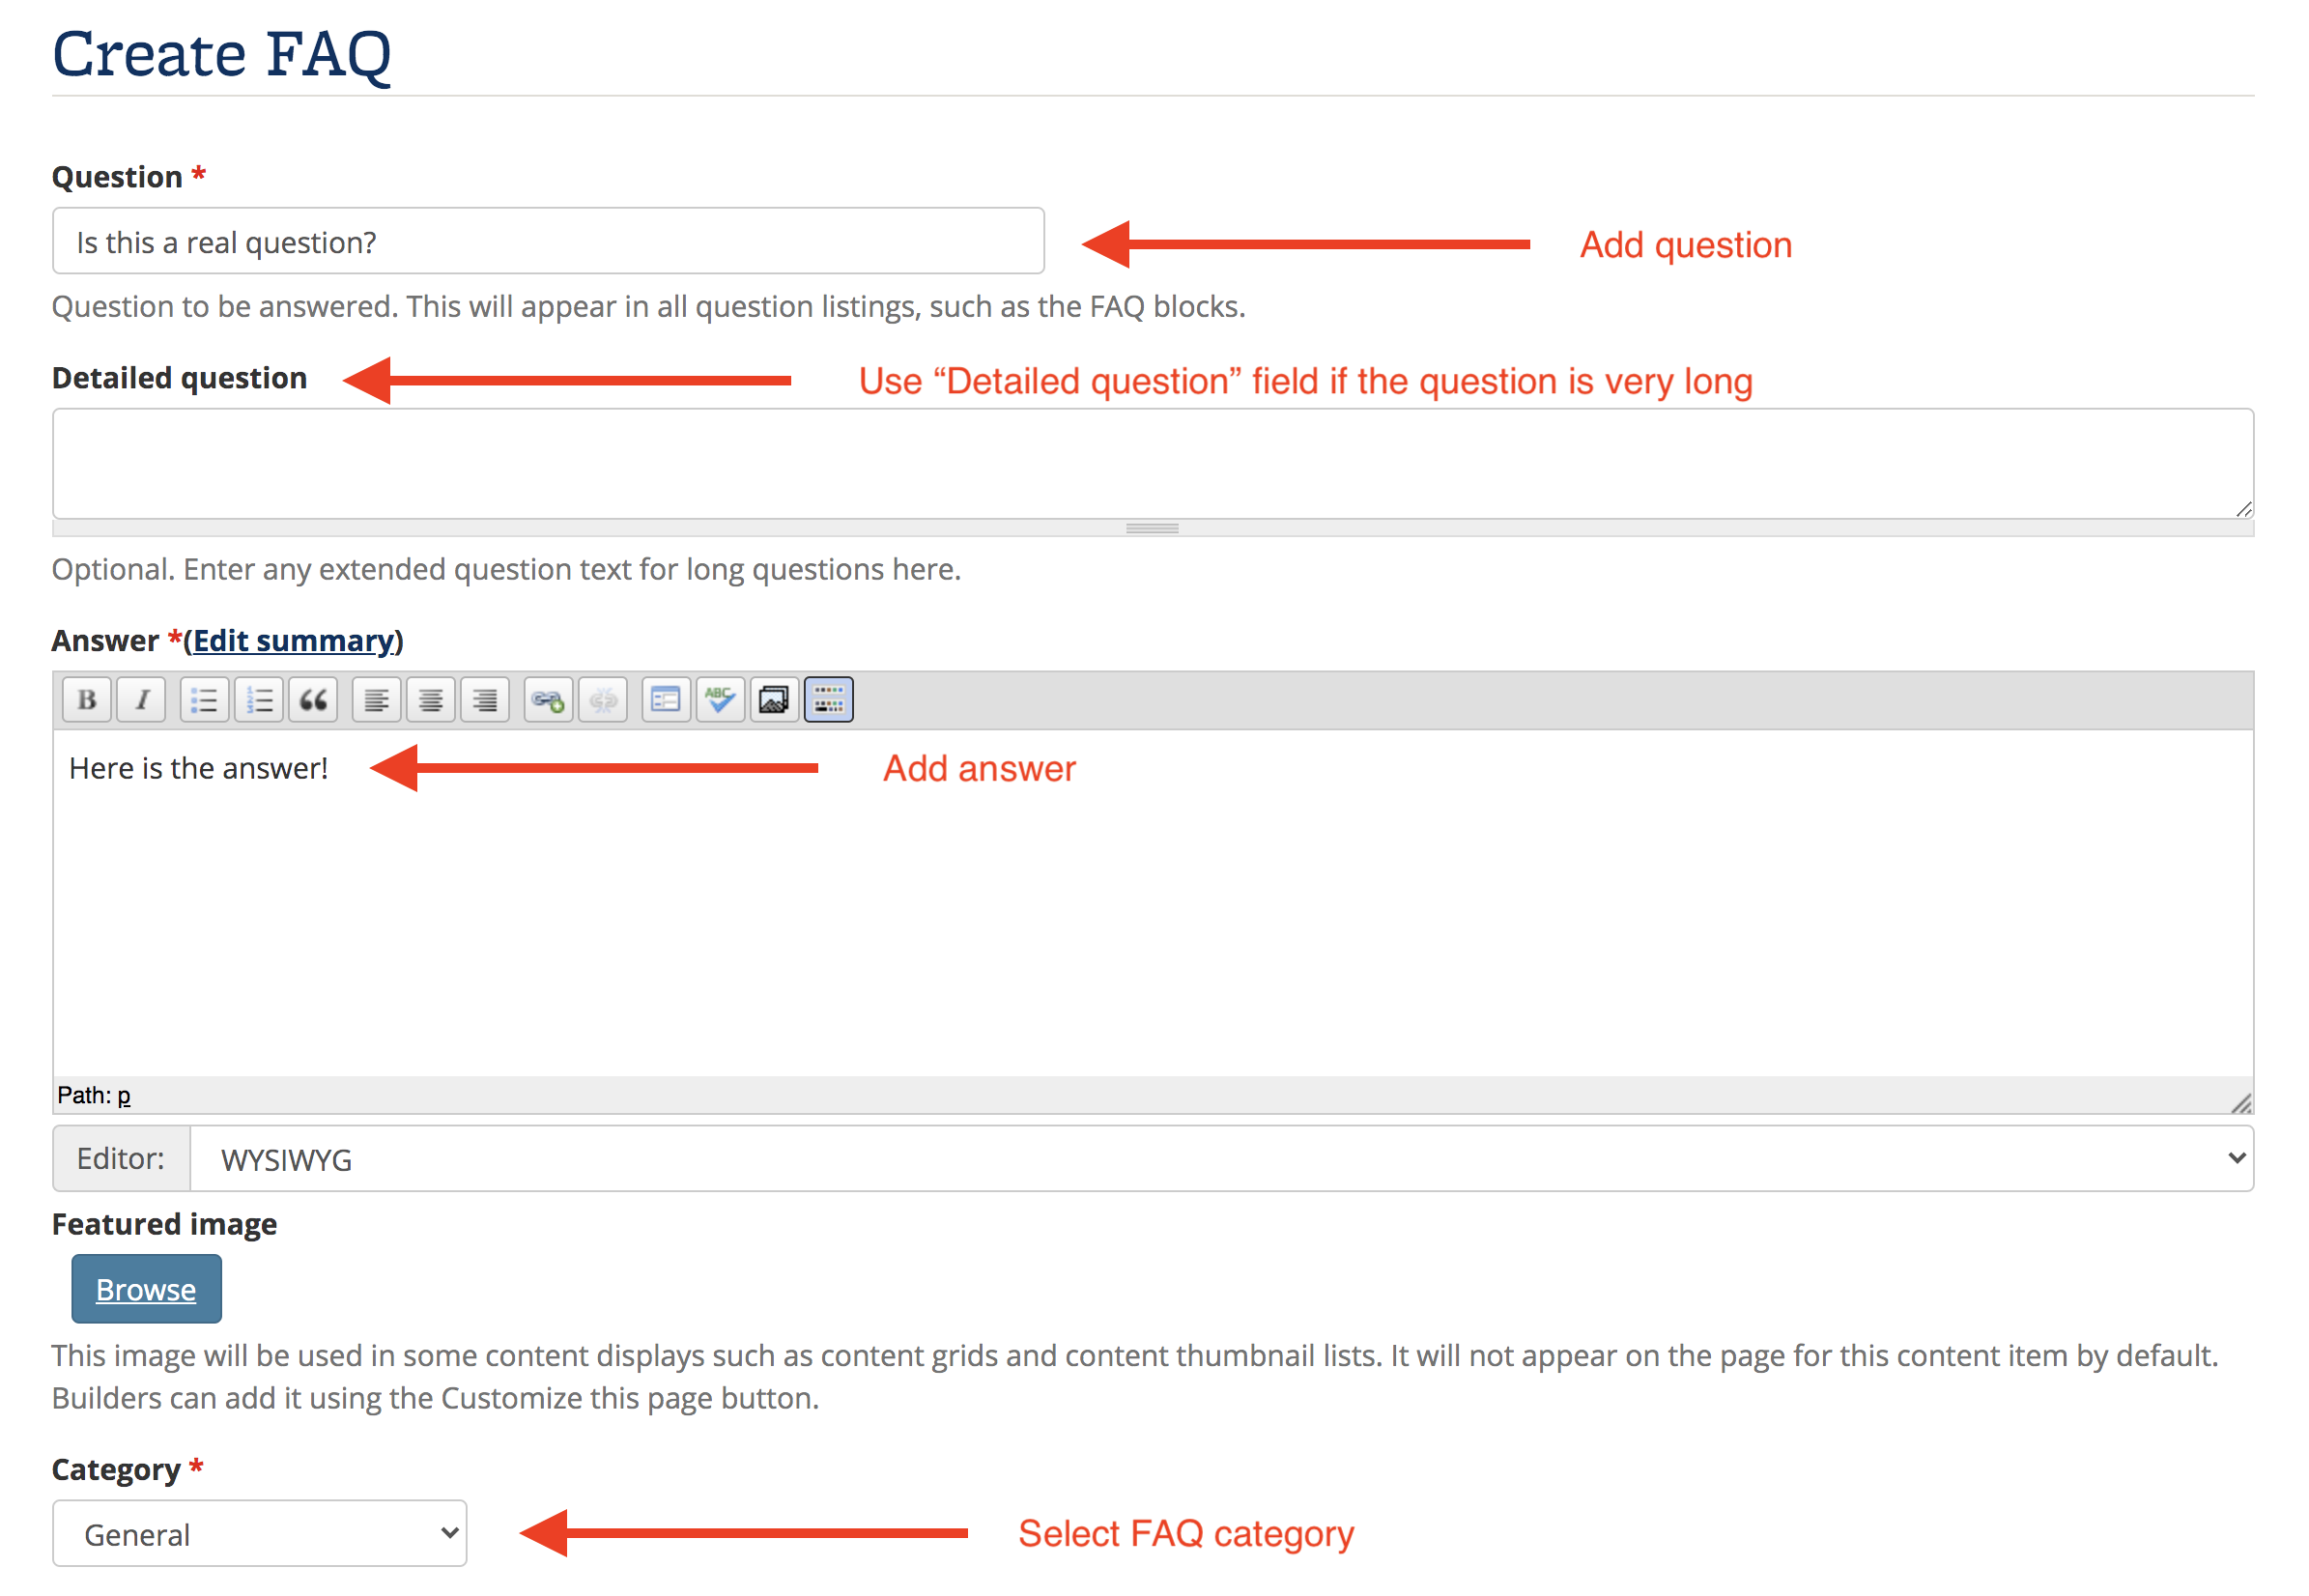  Screenshot of the Create FAQ editing interface